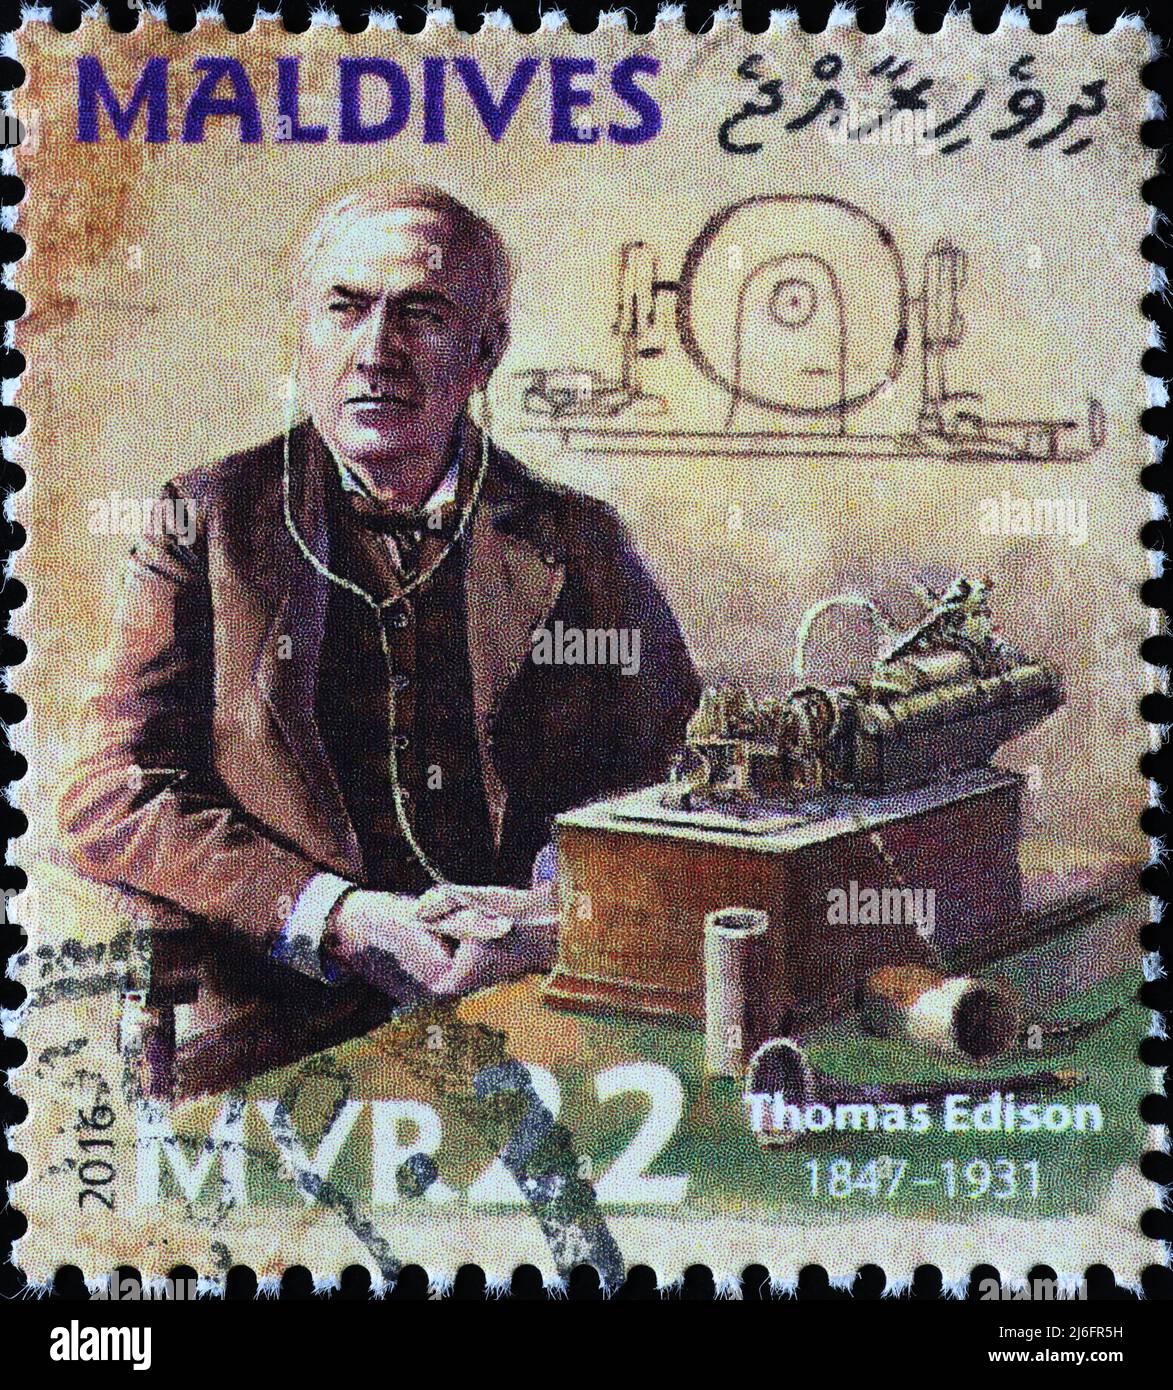 Thomas Edison portrait on stamp of Maldives Stock Photo